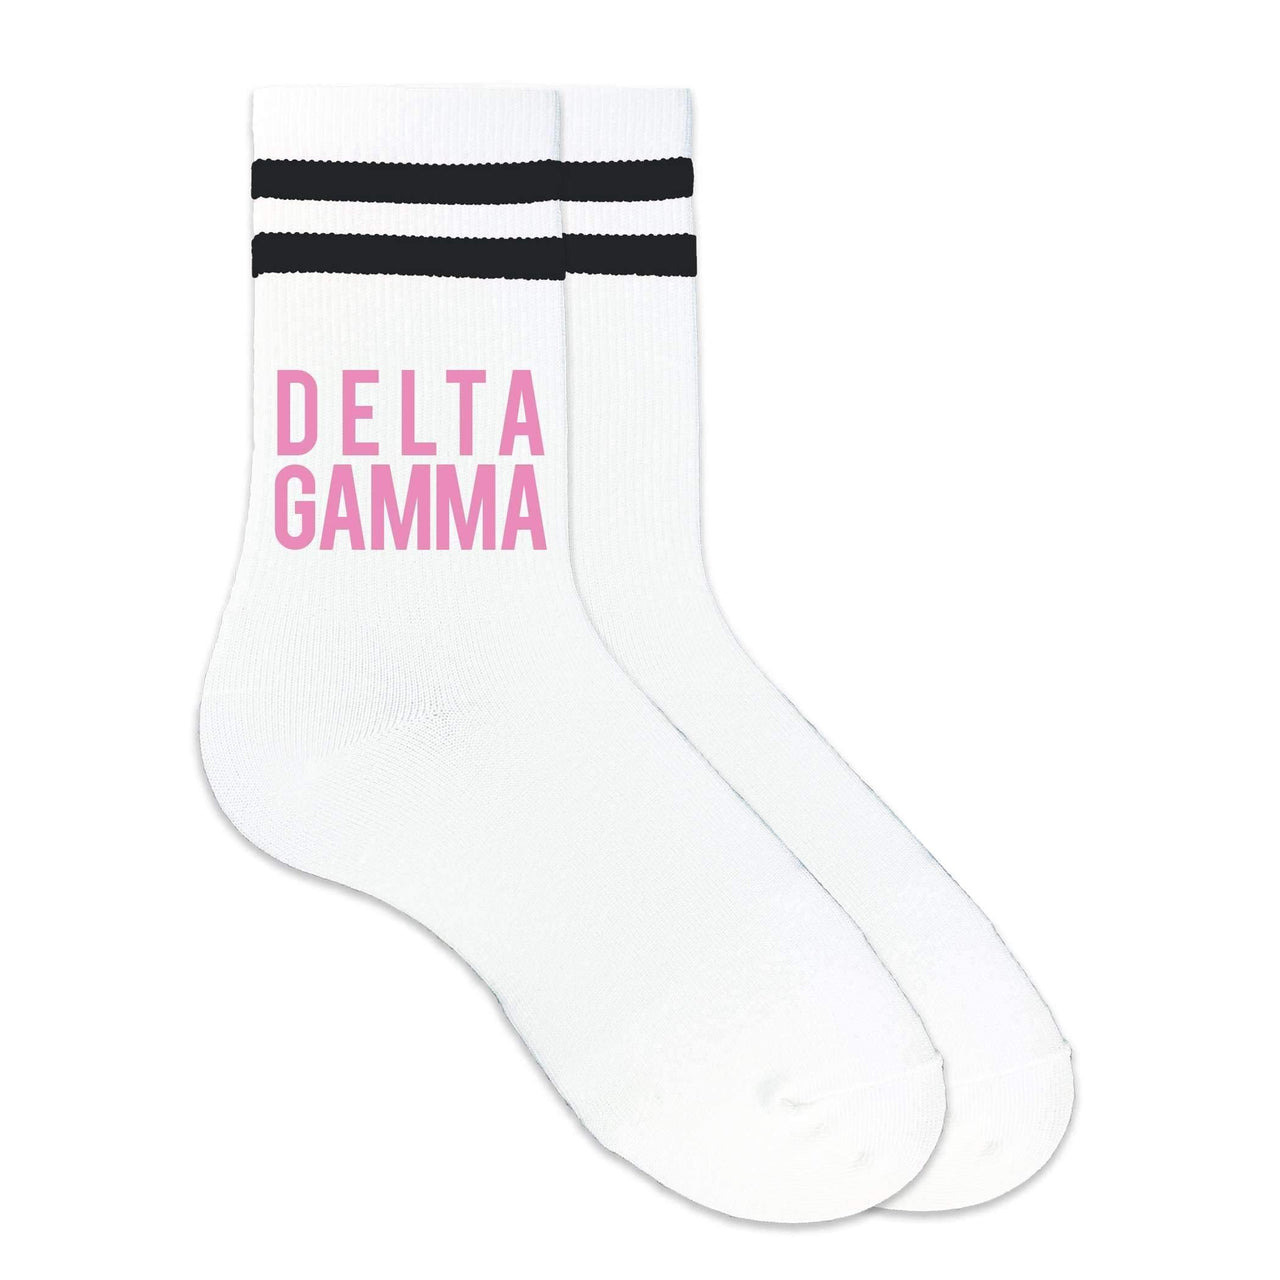 Delta Gamma sorority name custom printed on cute black striped crew socks